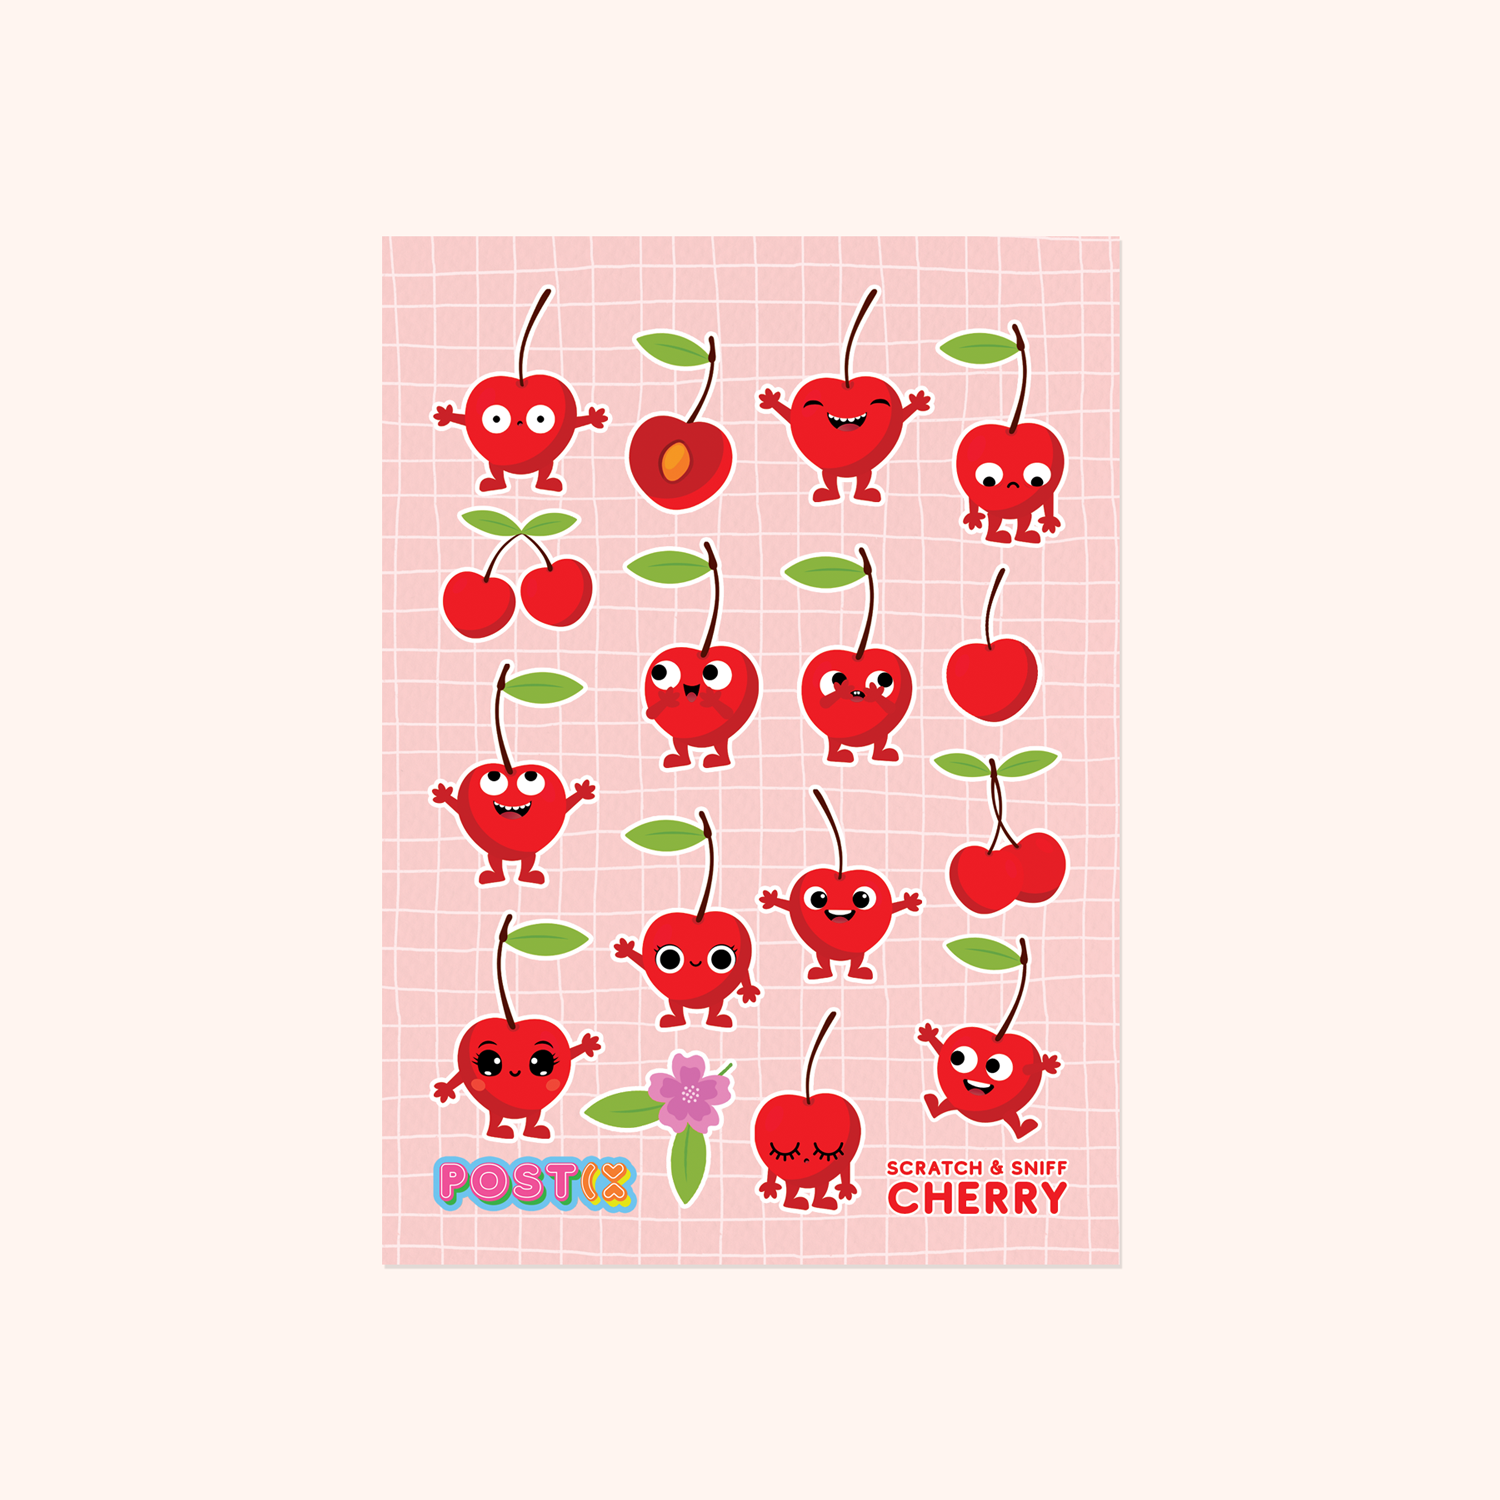 Cherry Good Scratch and Sniff Sticker Sheet